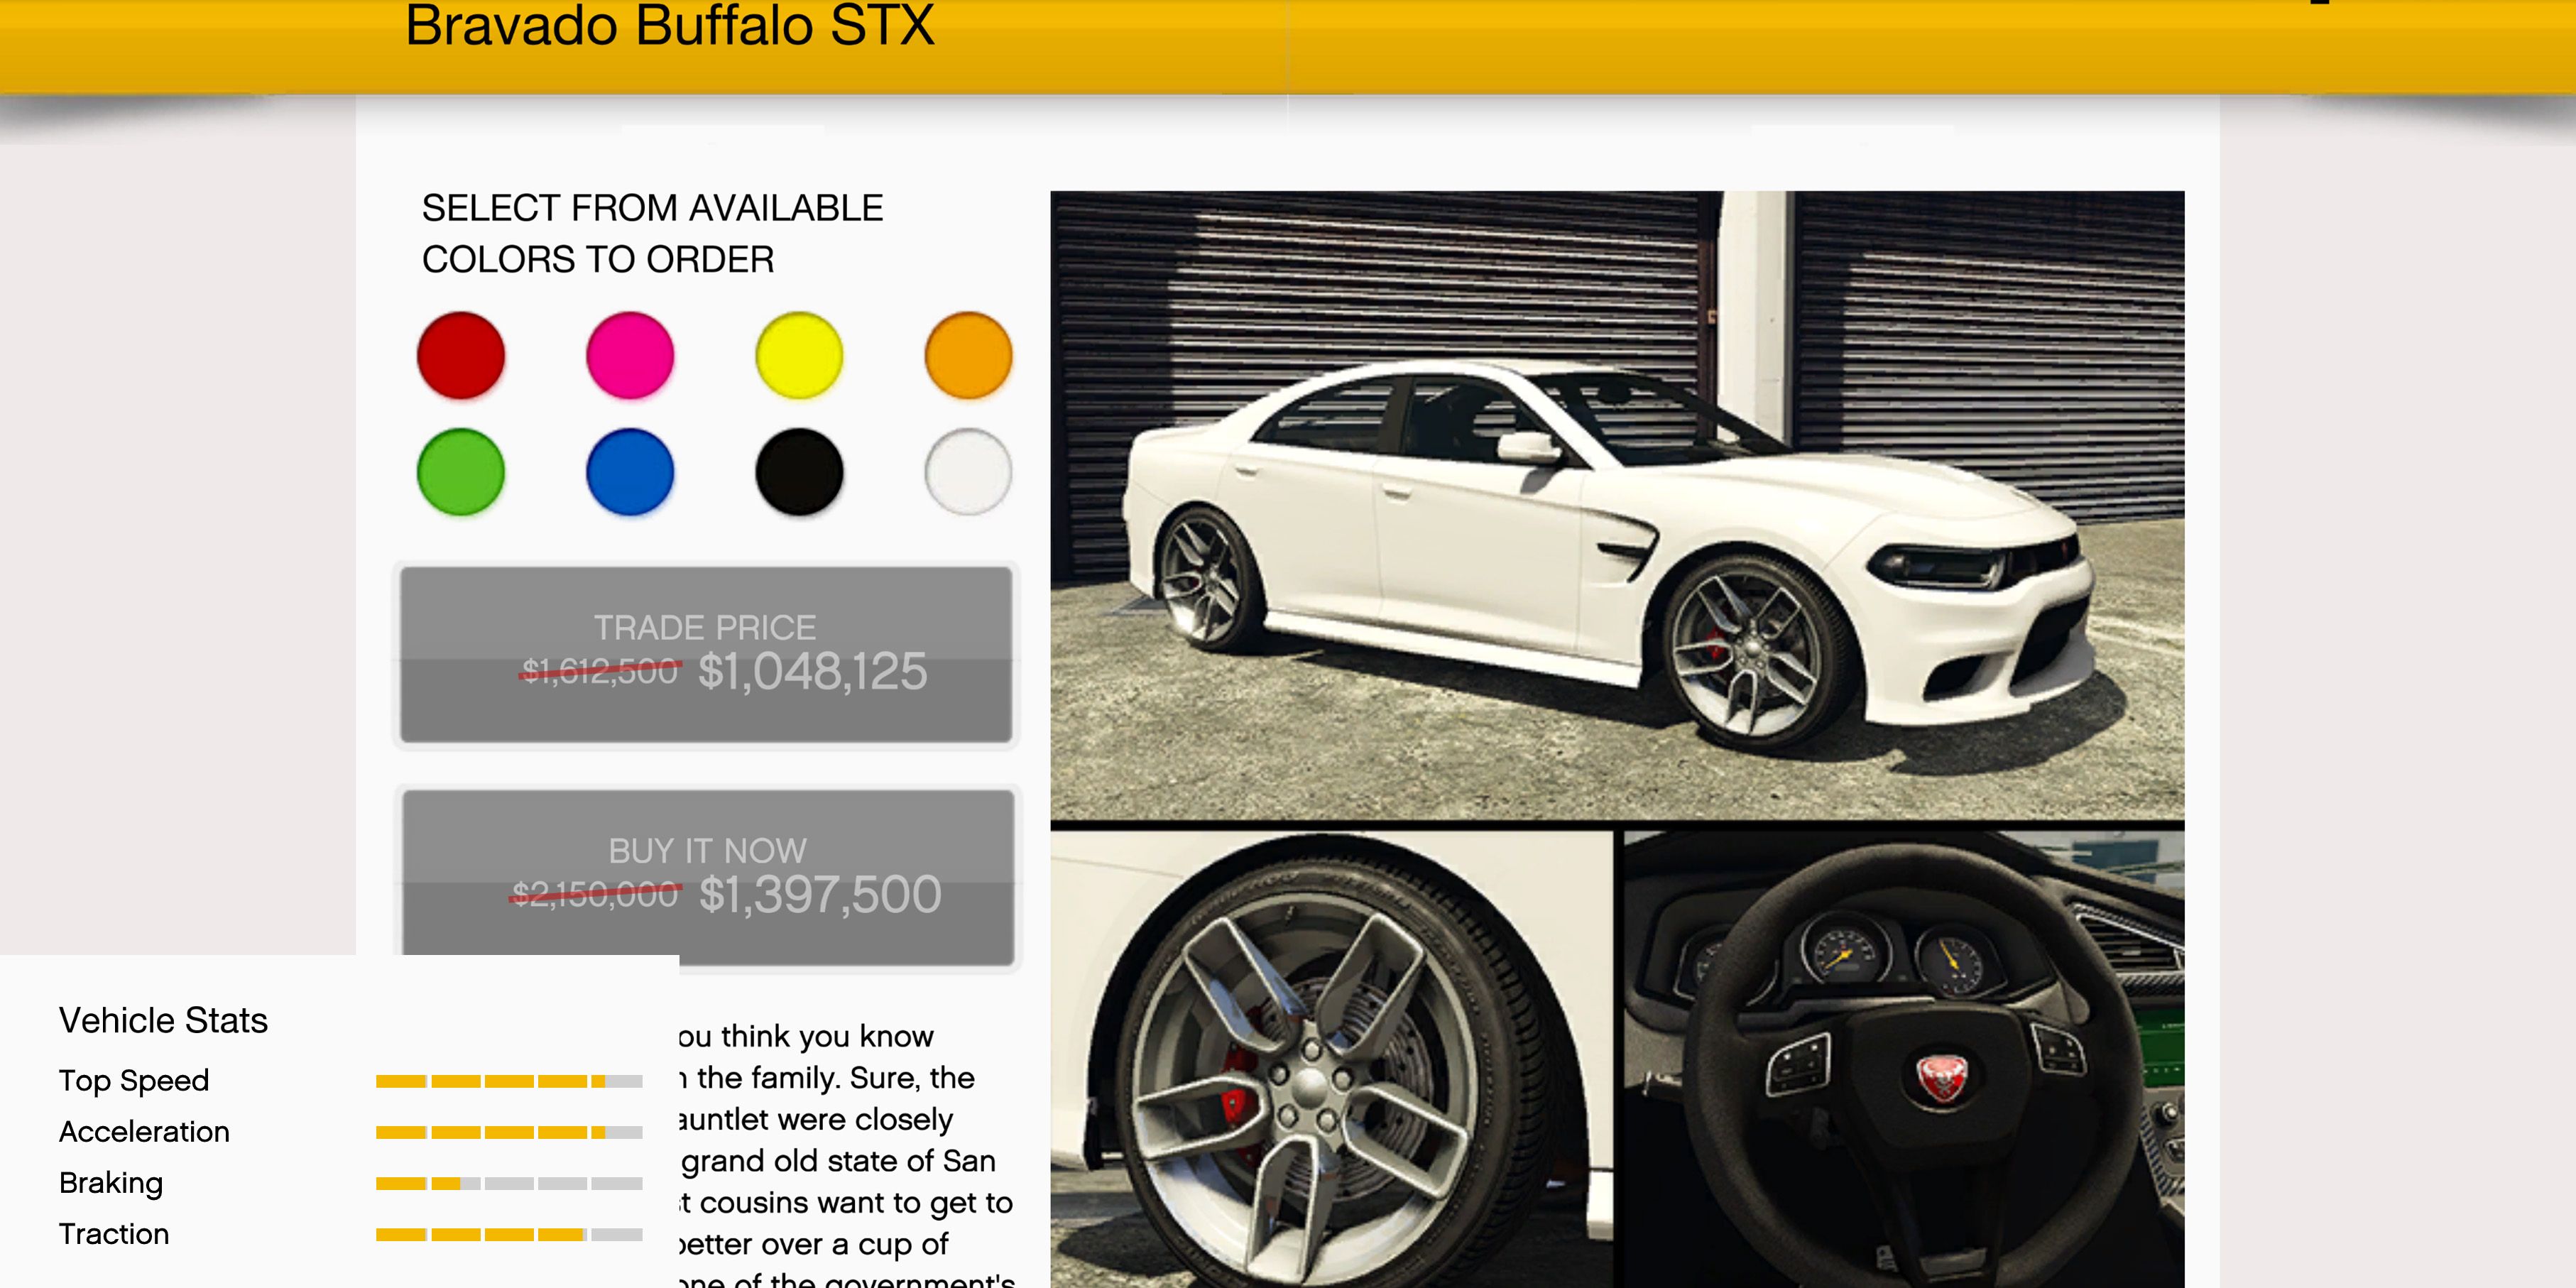 A white Bravado Buffalo STX for sale in GTA Online